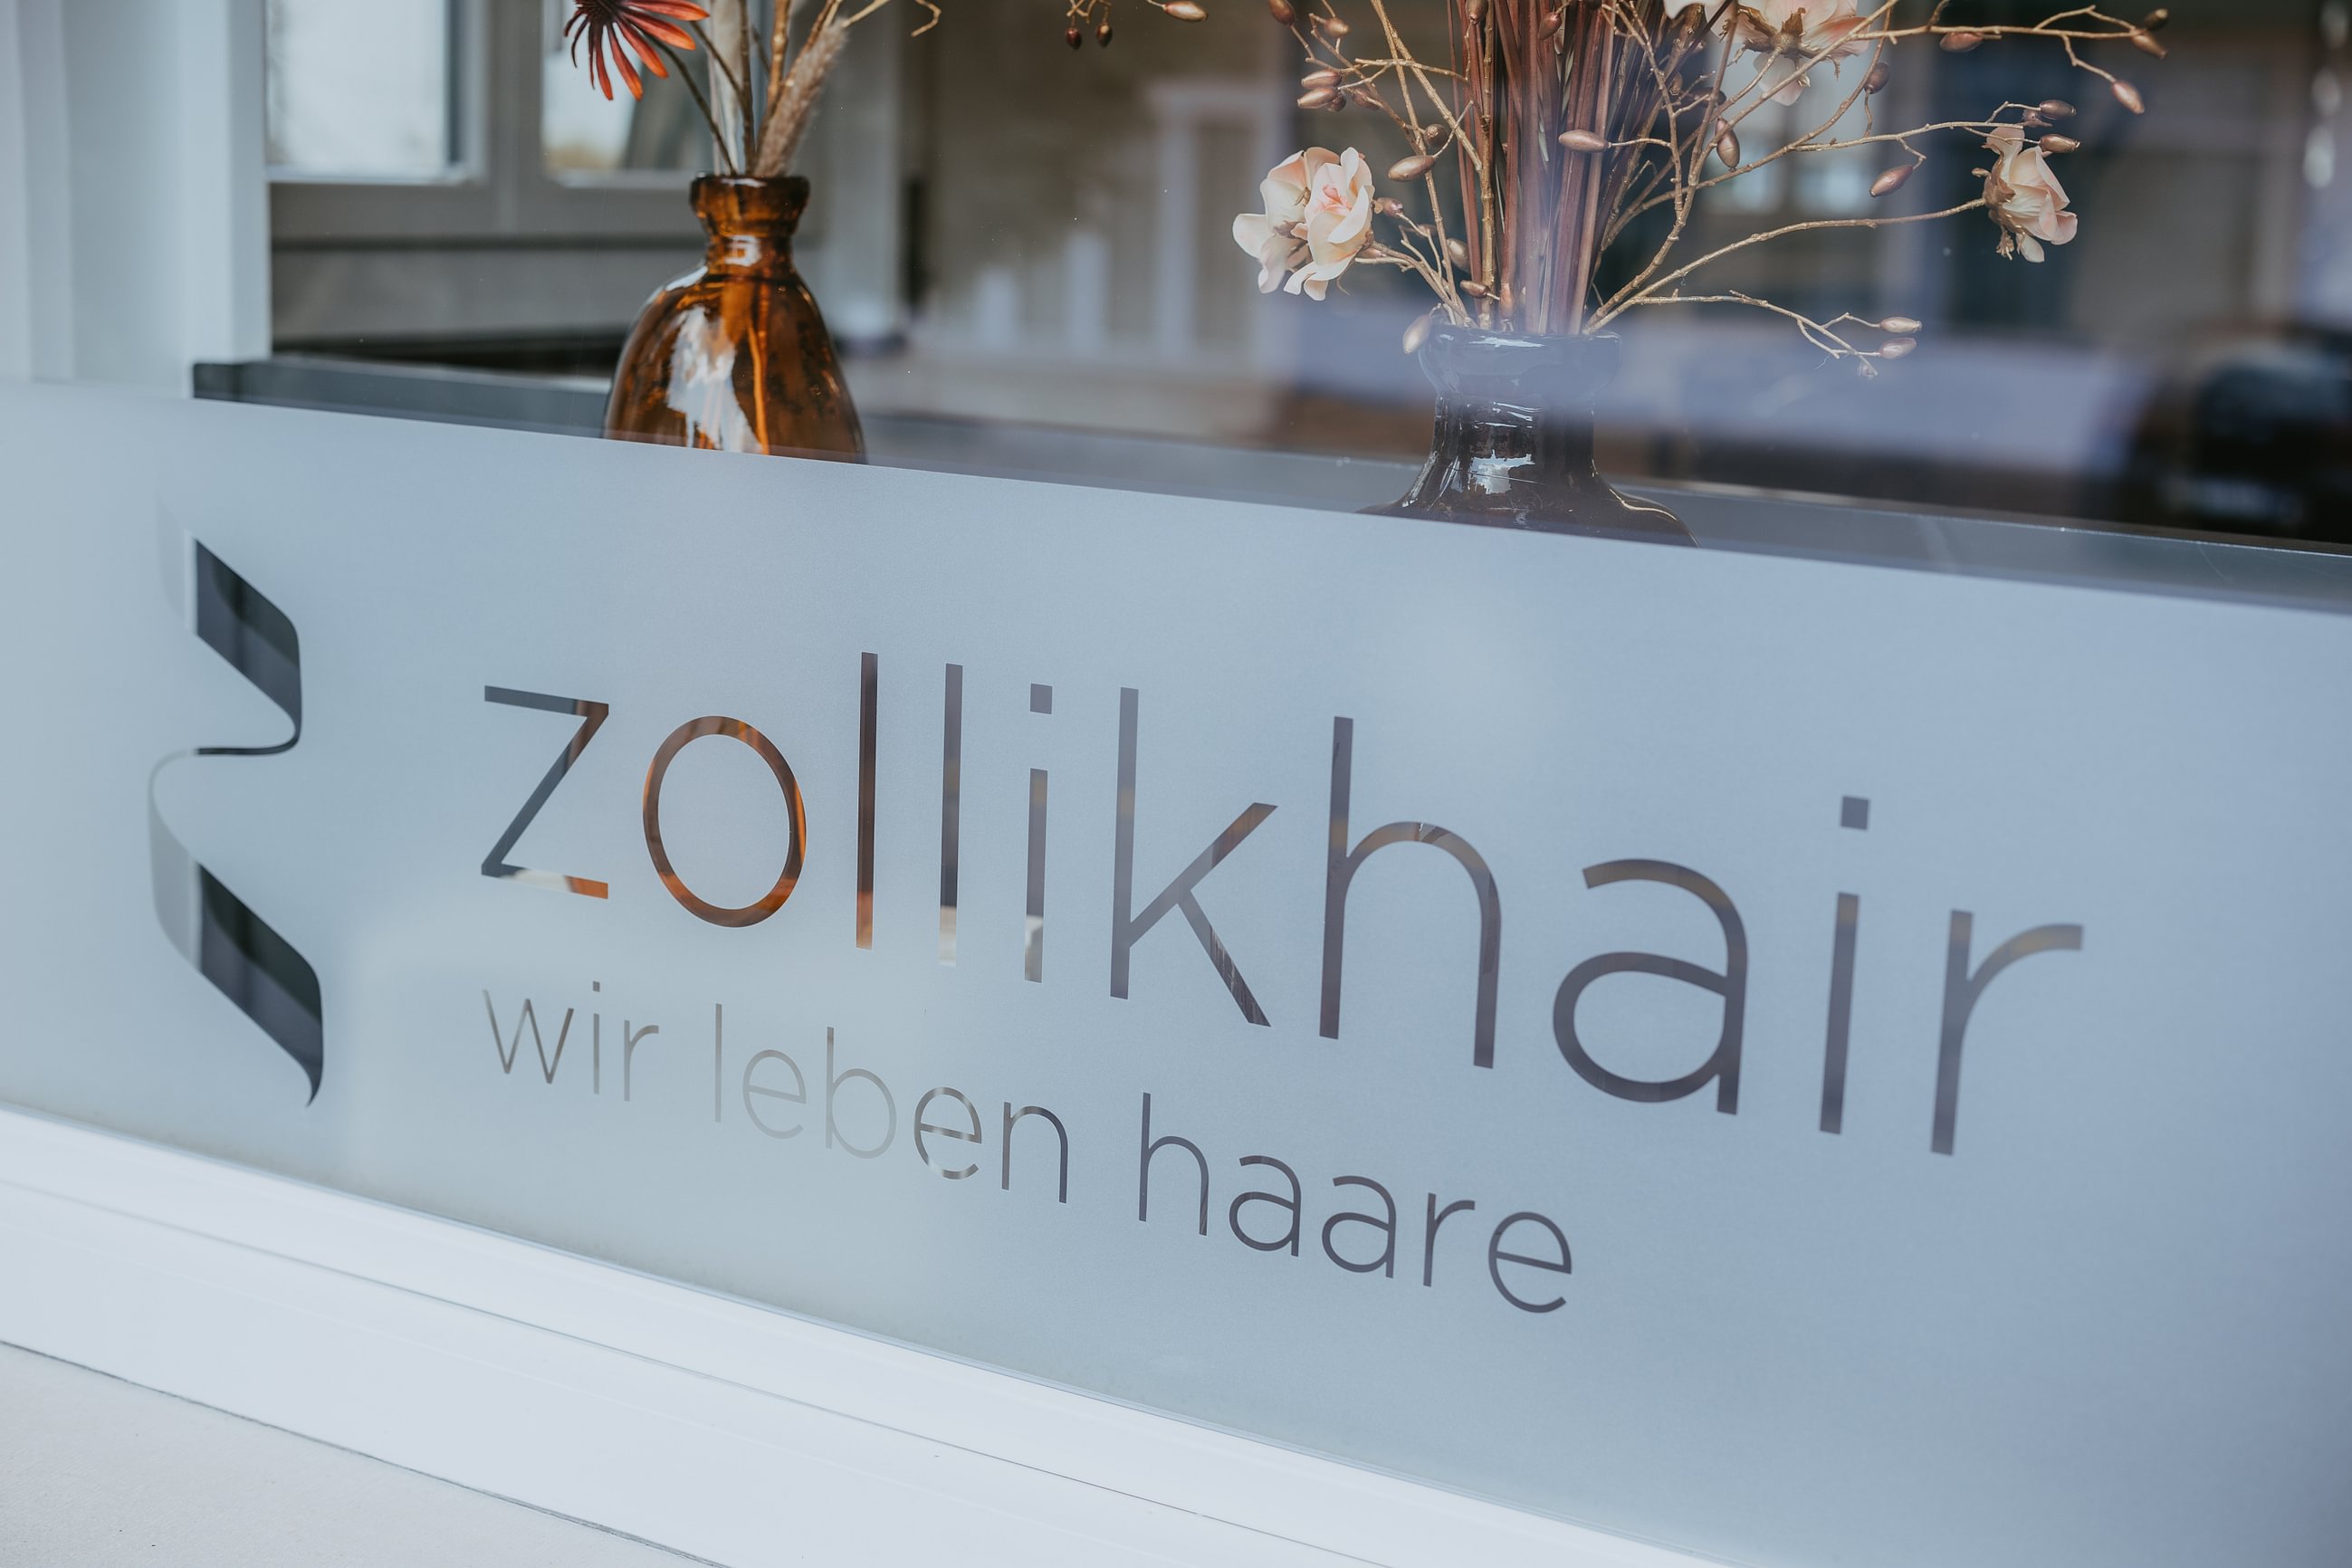 Bilder zollikhair GmbH